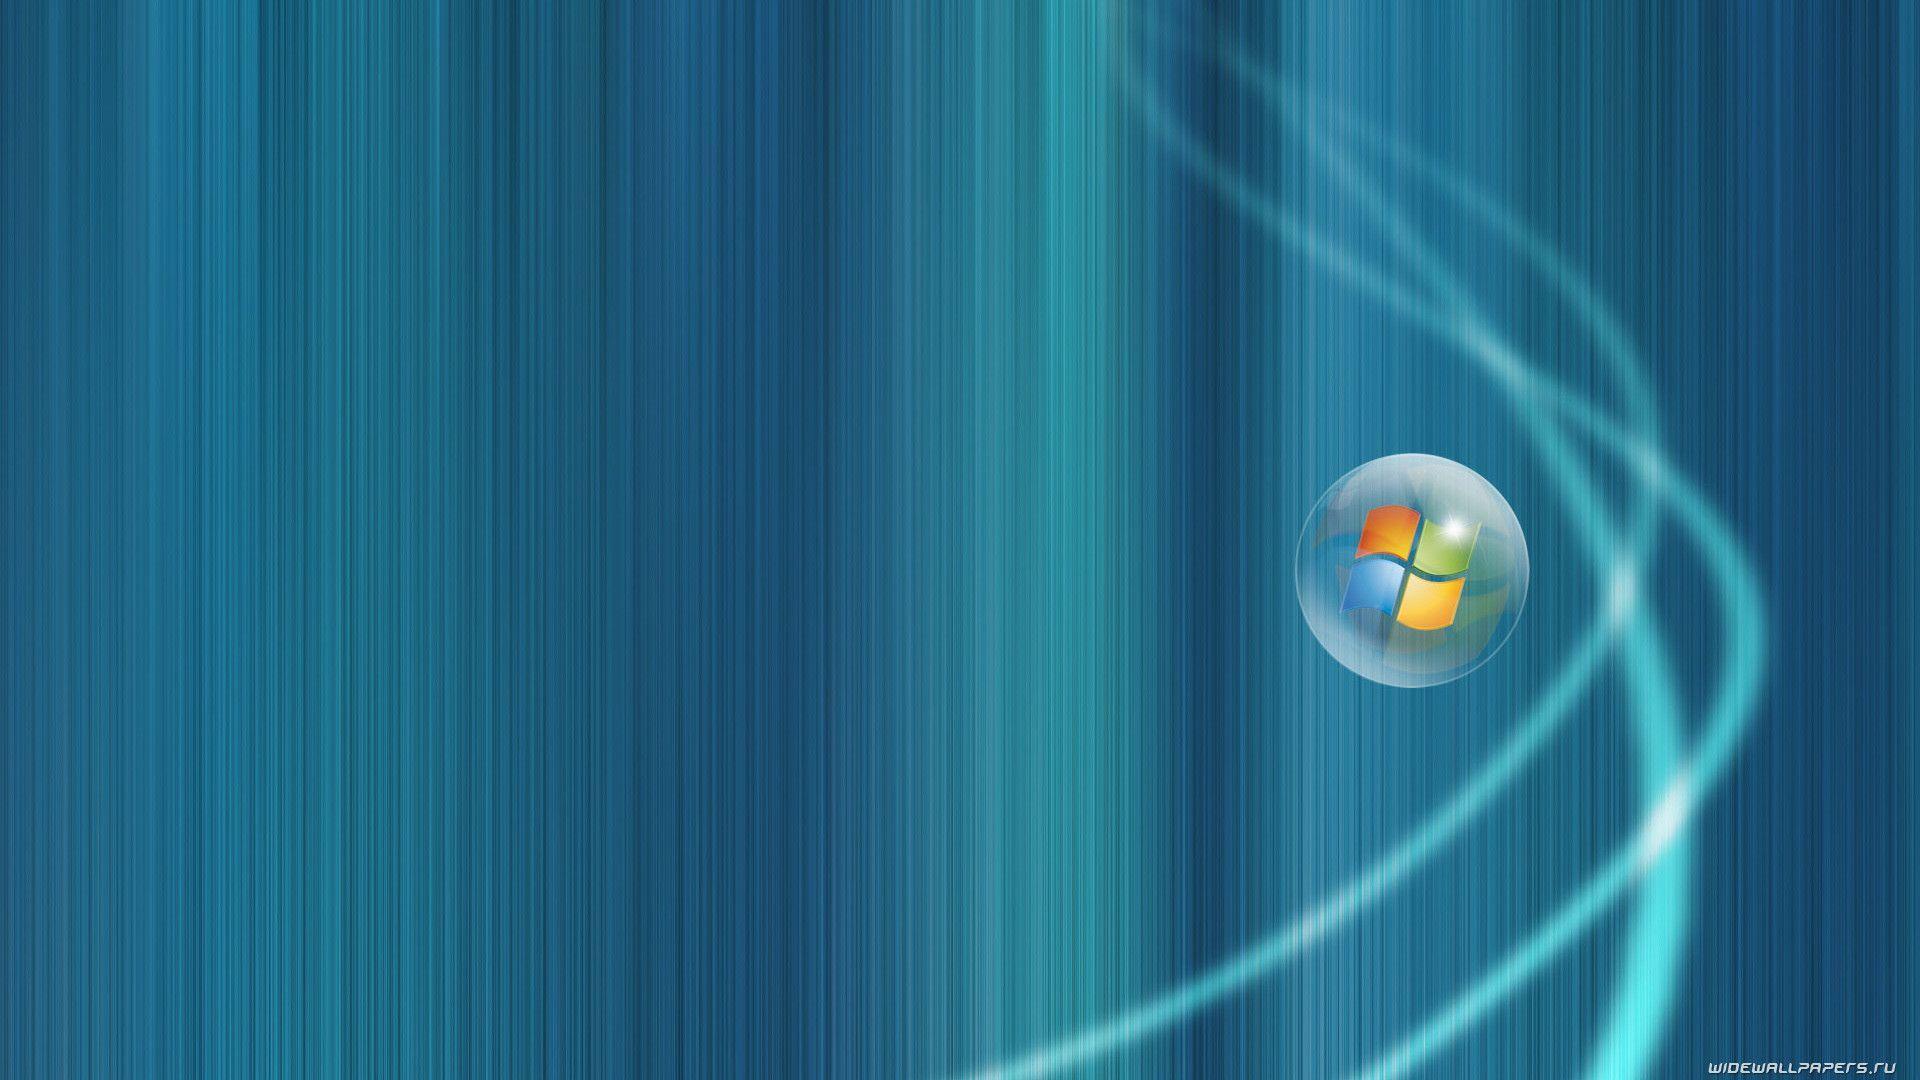 Windows Vista 1920X1080 wallpaper 70